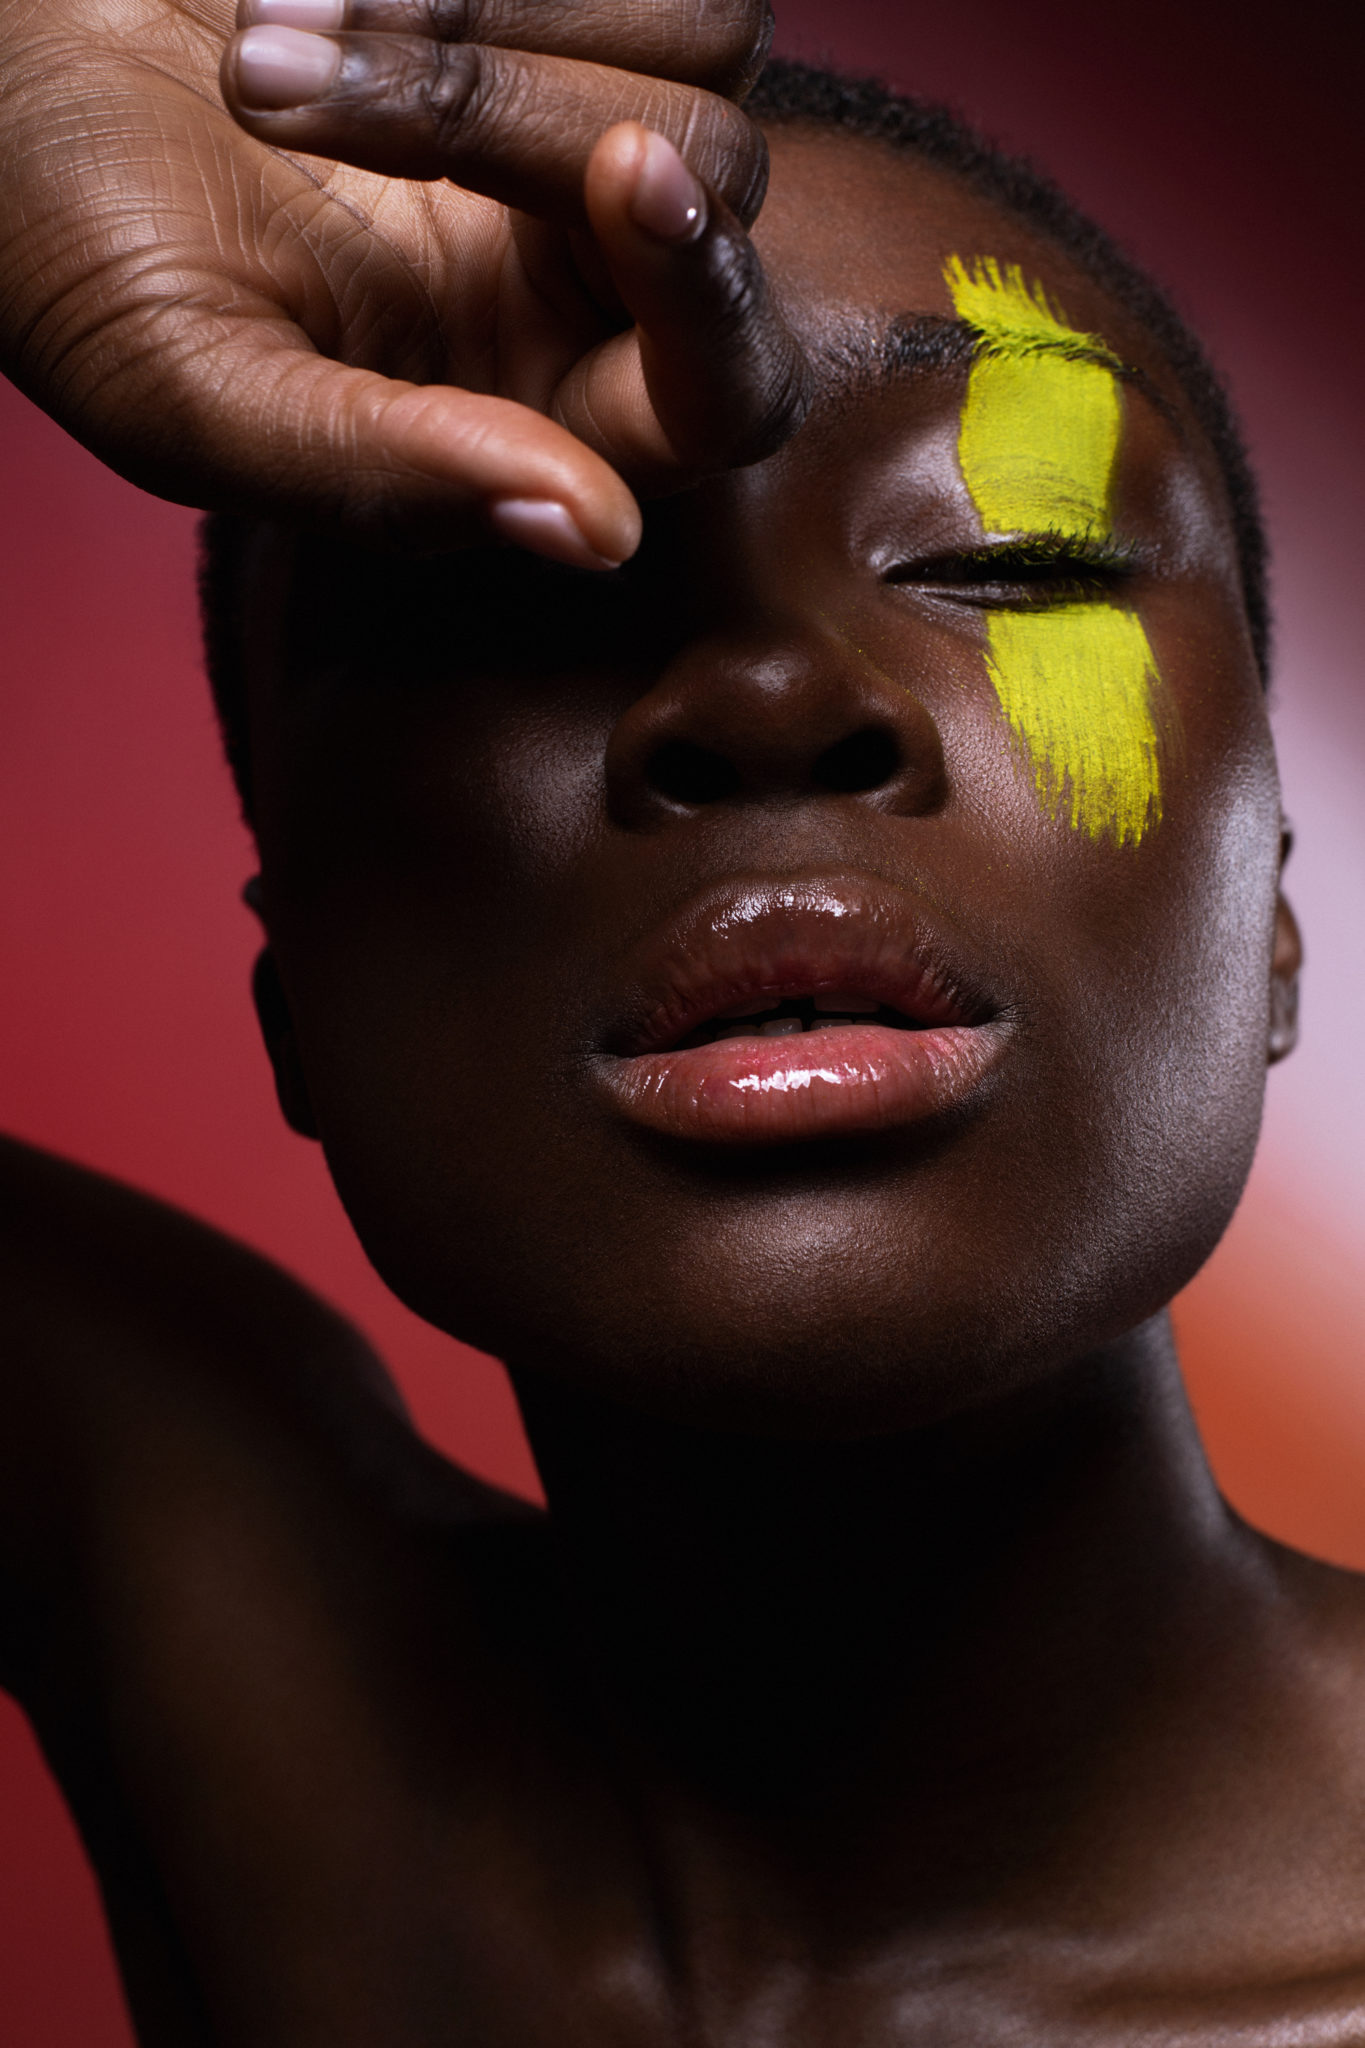 Color my face fashion story beauty editorial make up photography tina picard le dernier etage magazine webzine